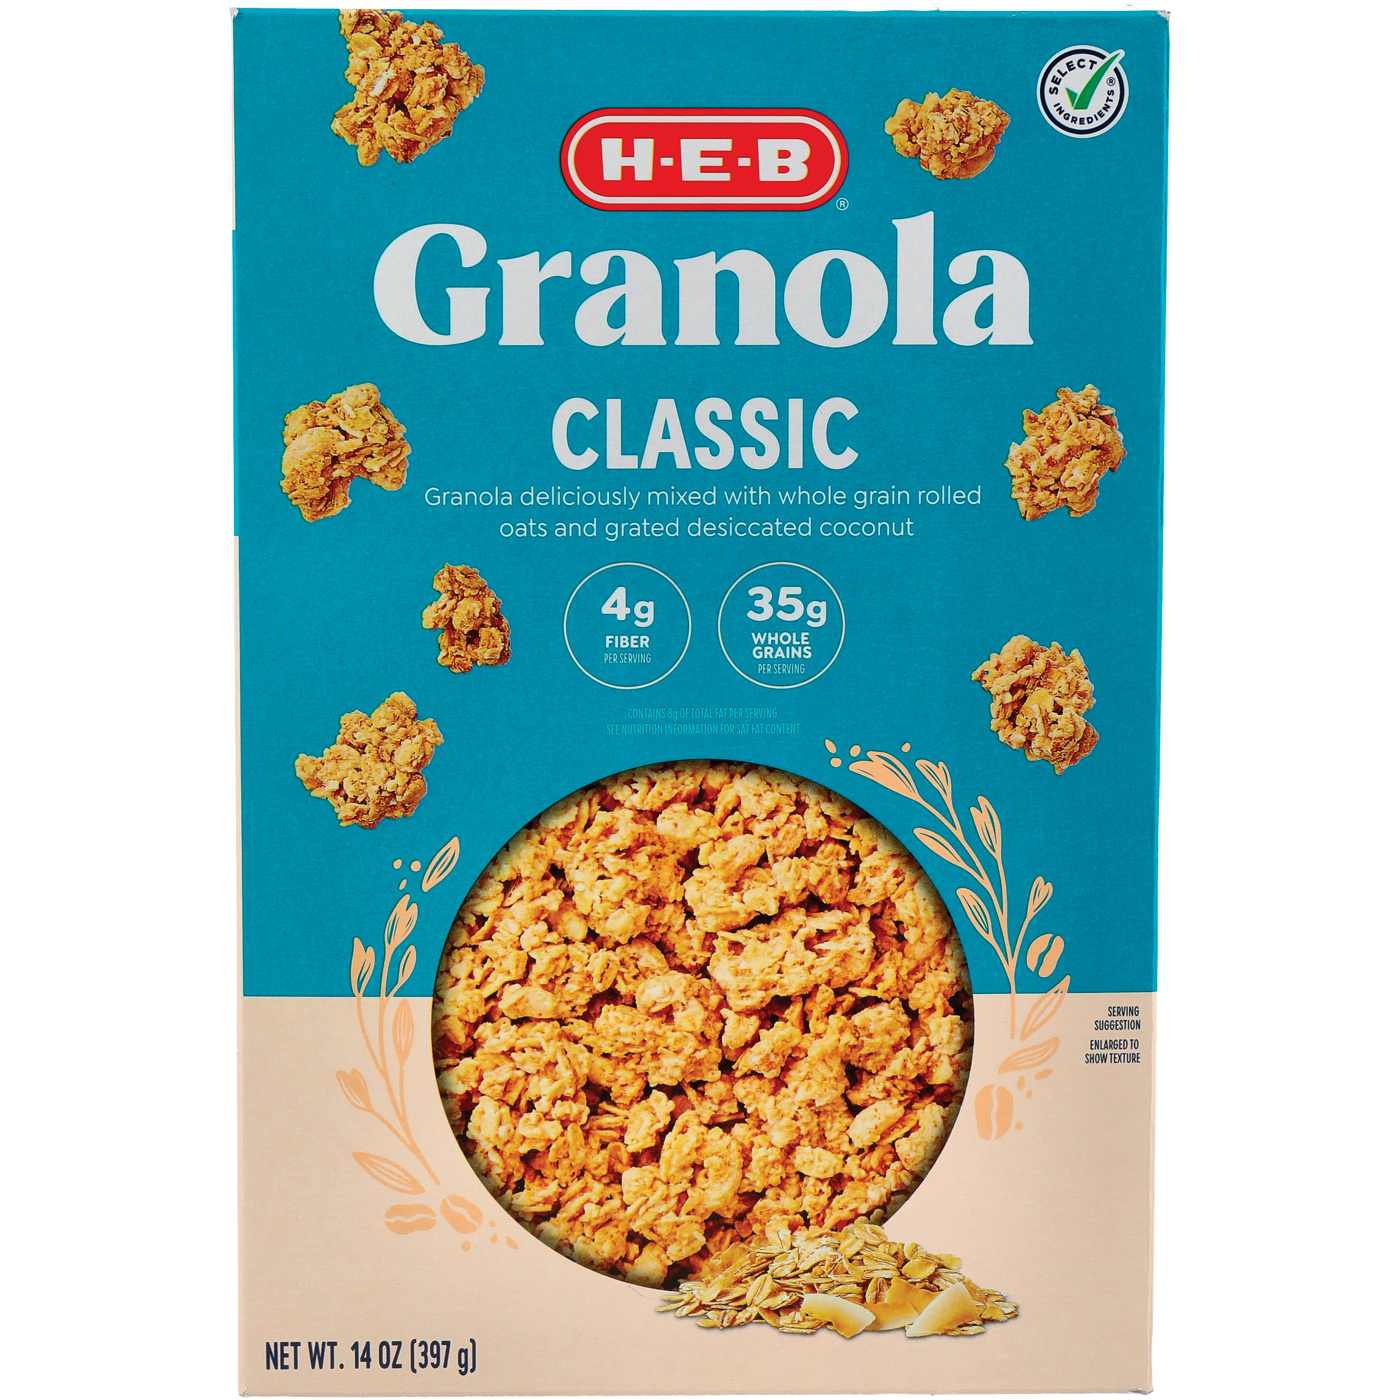 granola cereal brands